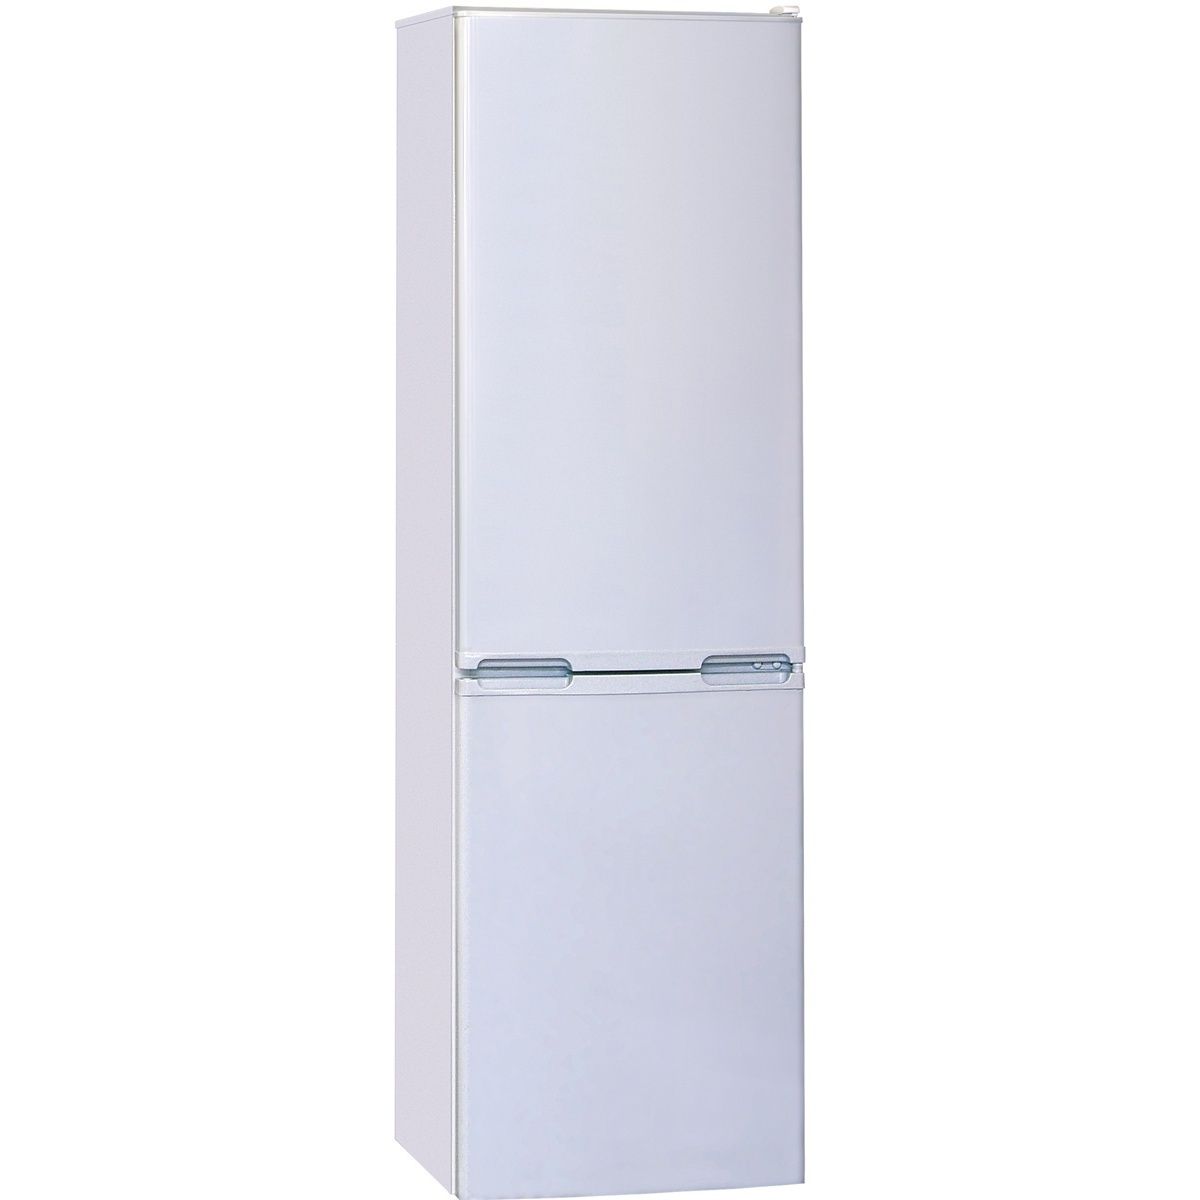 Узкие холодильники до 55 см. Холодильник Атлант 4214-000. Атлант холодильник XM 4214. Холодильник ATLANT хм 4214-000. Холодильник Атлант XM-4214-000.